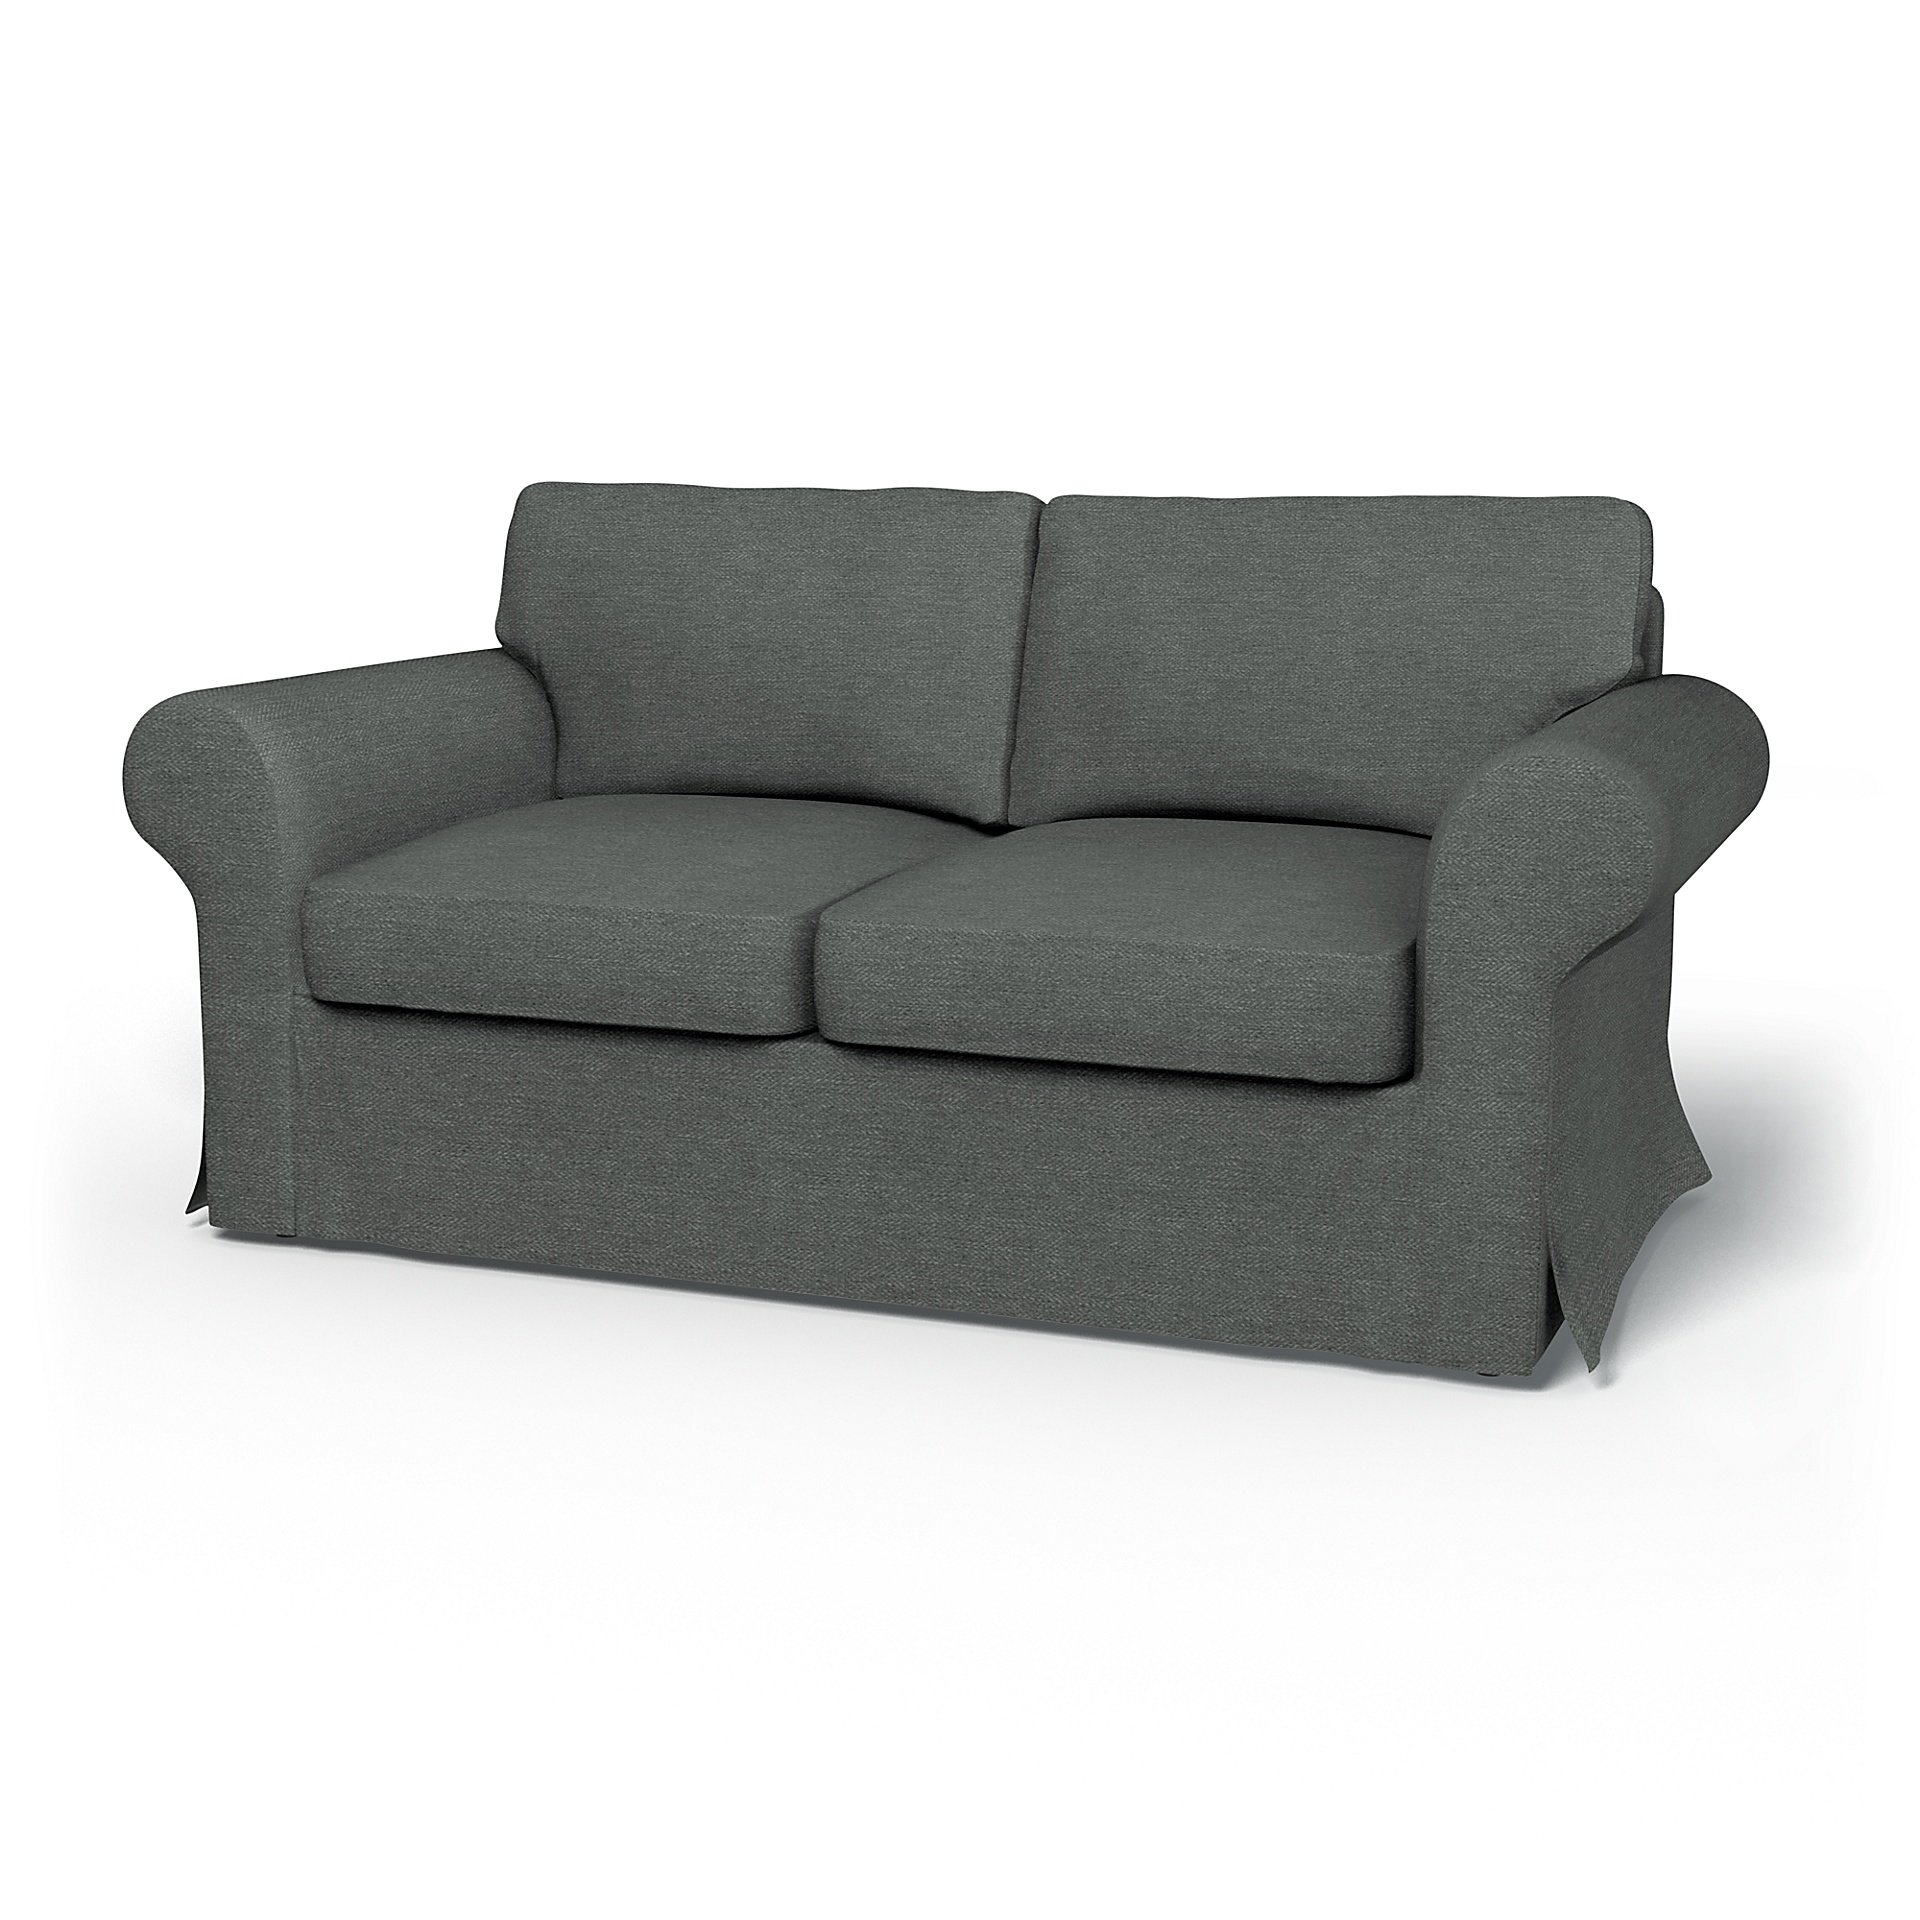 IKEA - Ektorp 2 Seater Sofa Bed Cover, Laurel, Boucle & Texture - Bemz